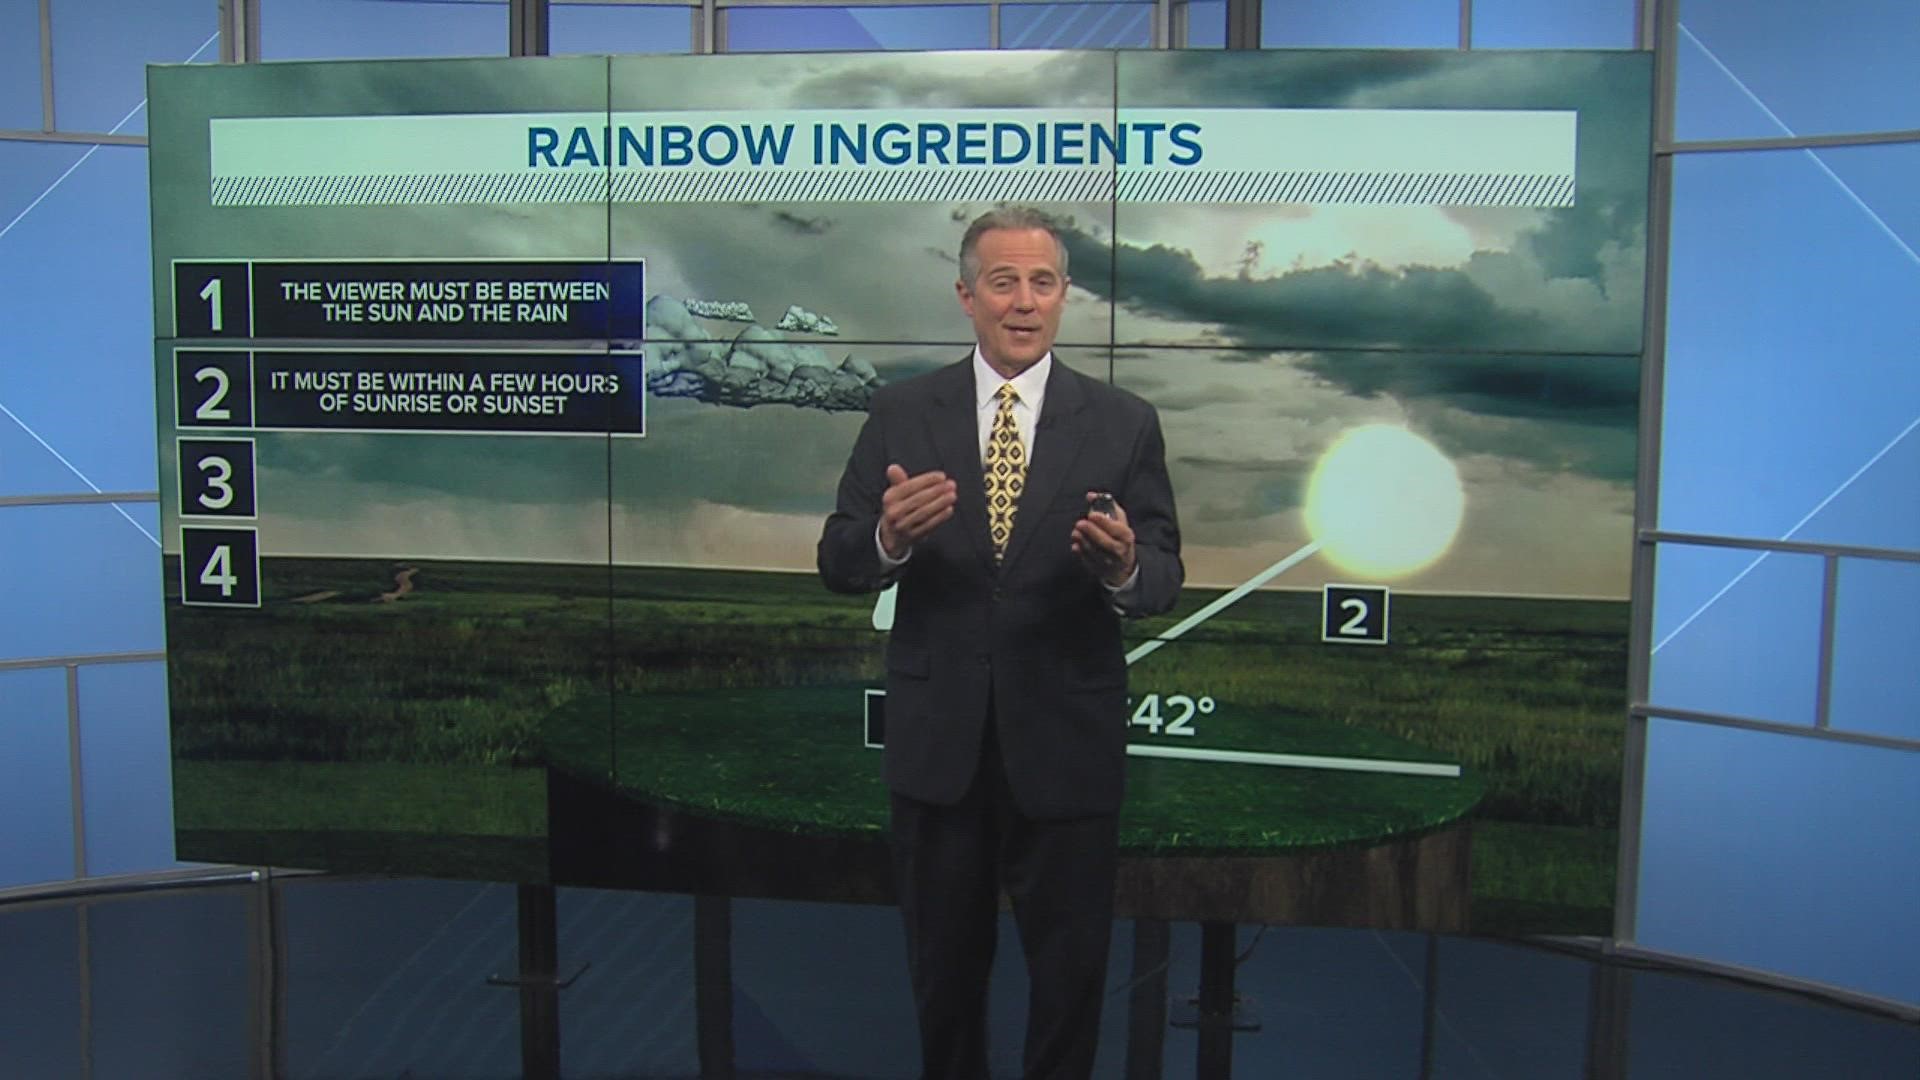 Ingredients for rainbows